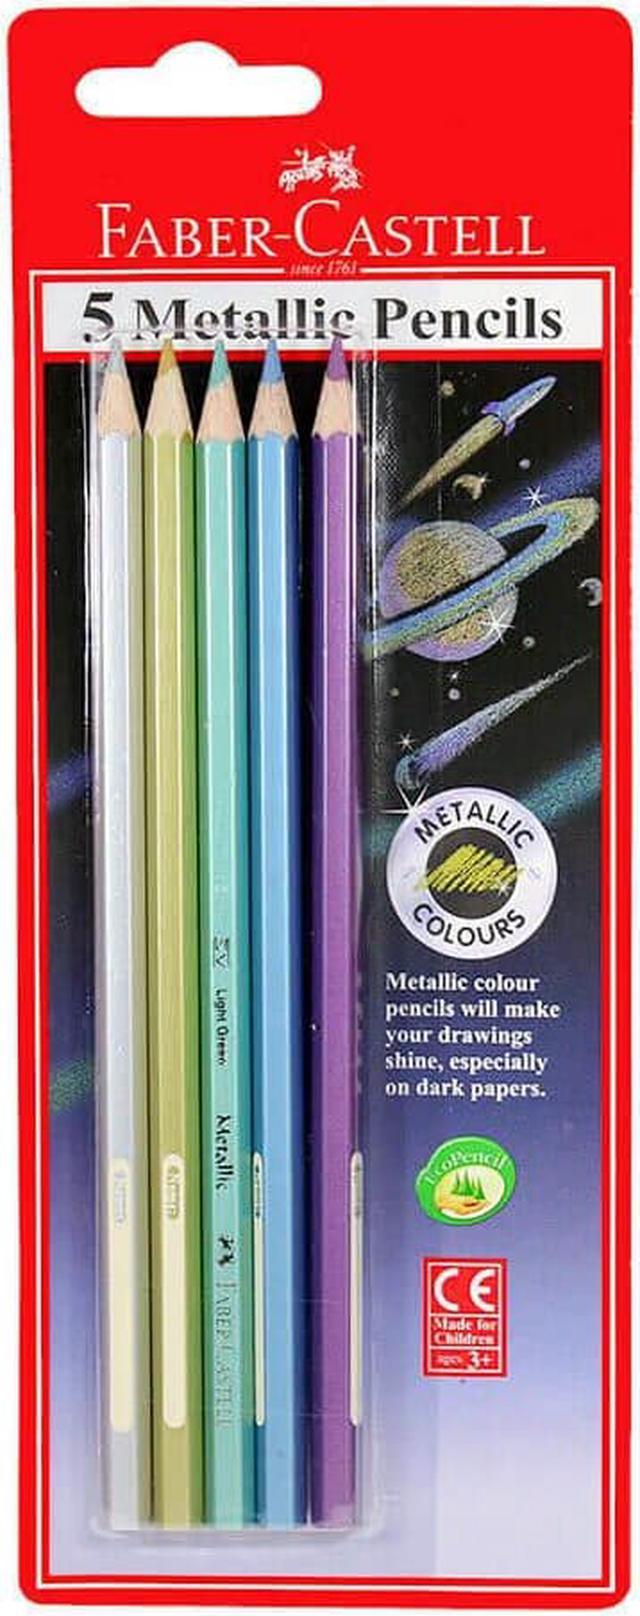 Faber-Castell Metallic Pencils (5pk) 